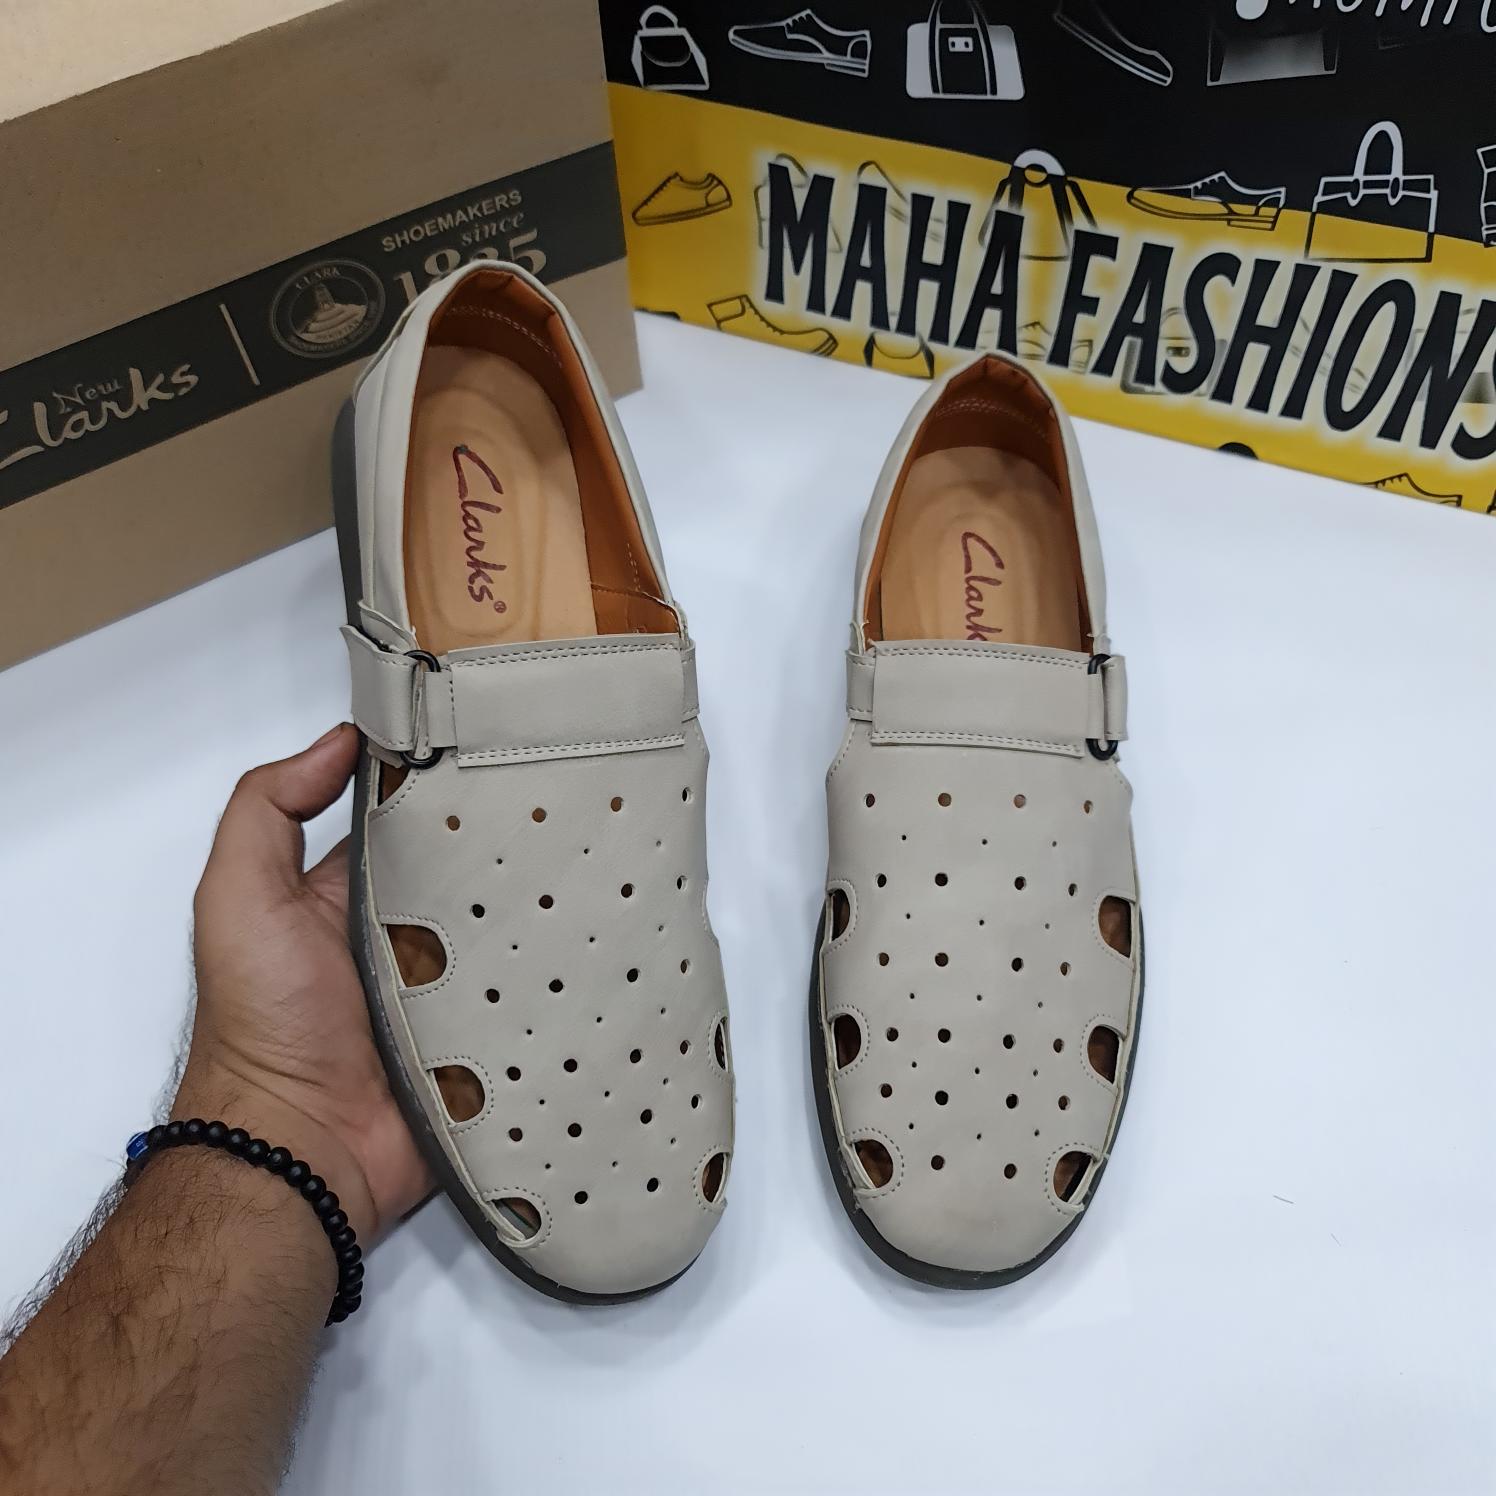 RM-004 - Maha fashions -  